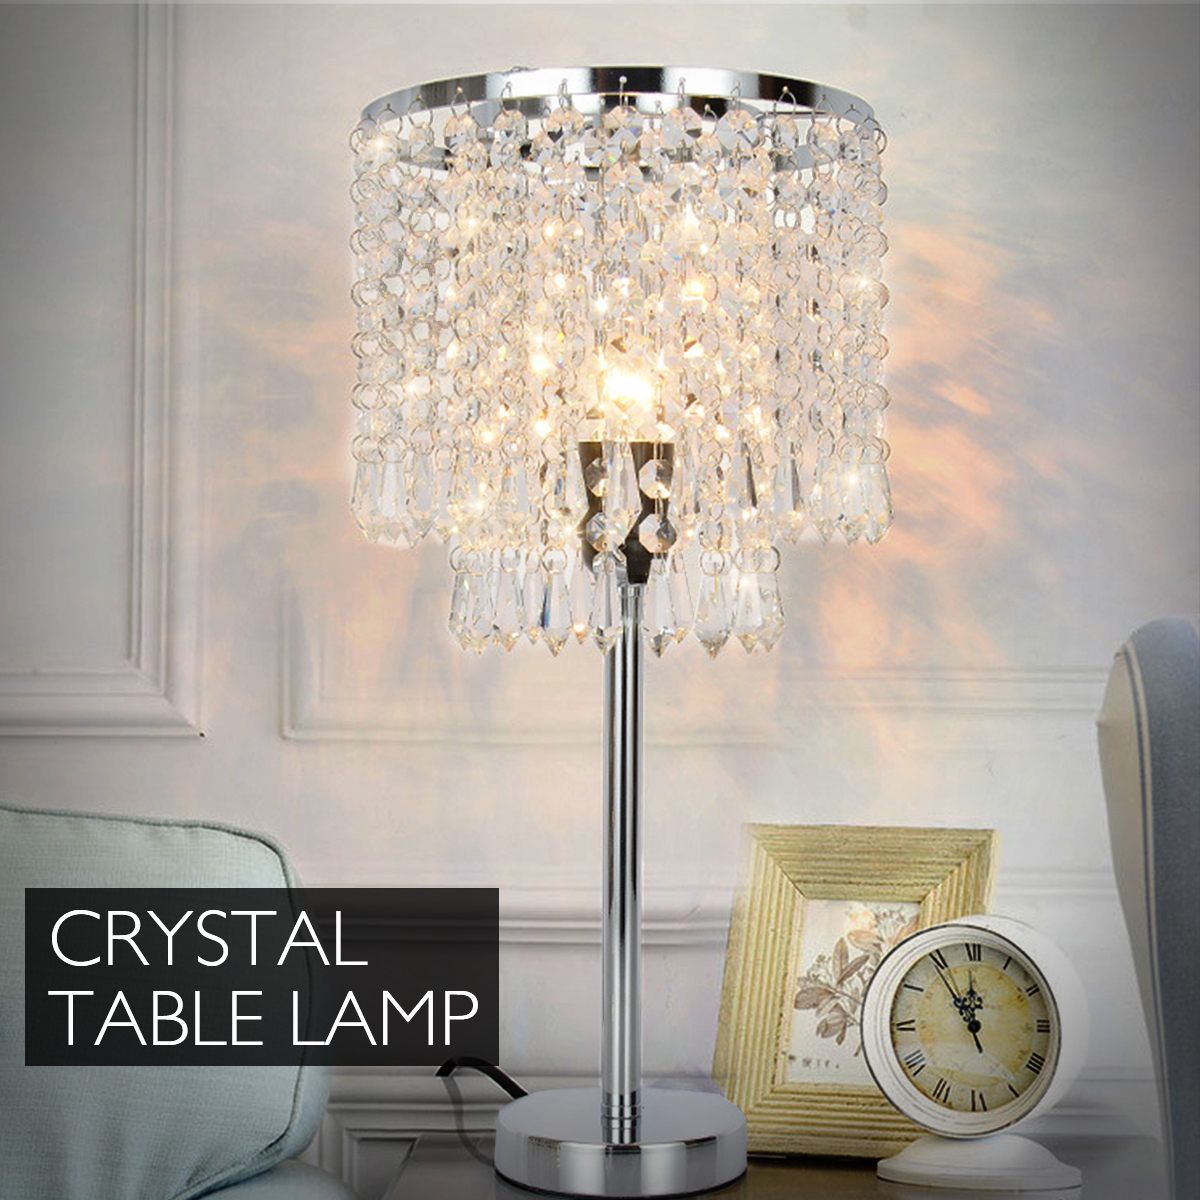 Crystal-Table-Pendant-Lamps-Bedroom-Modern-Wedding-Decoration-Dimmable-Desk-Lamp-for-Bedside-Living--1789821-1